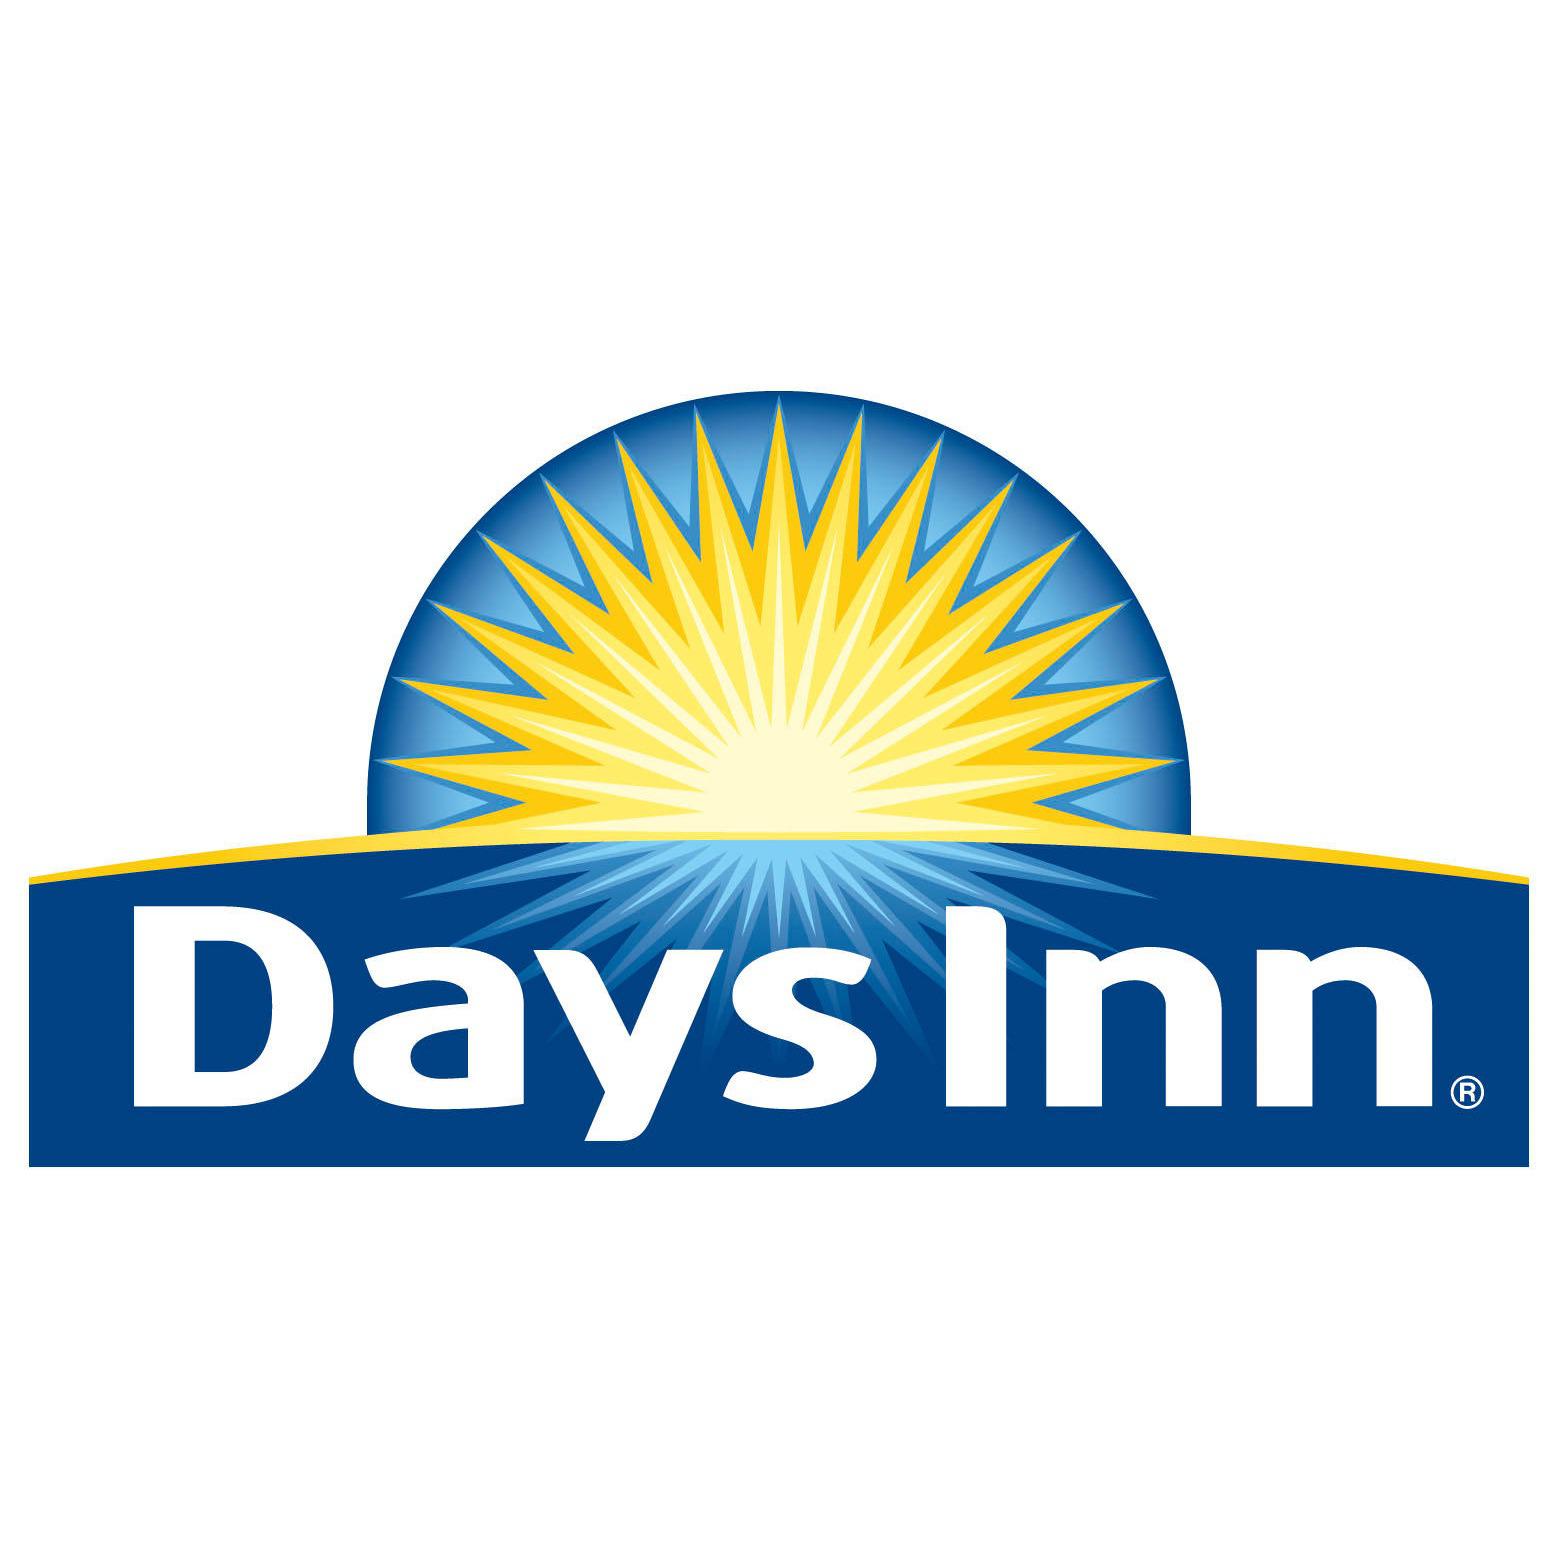 Days Inn by Wyndham Dortmund West in Dortmund - Logo